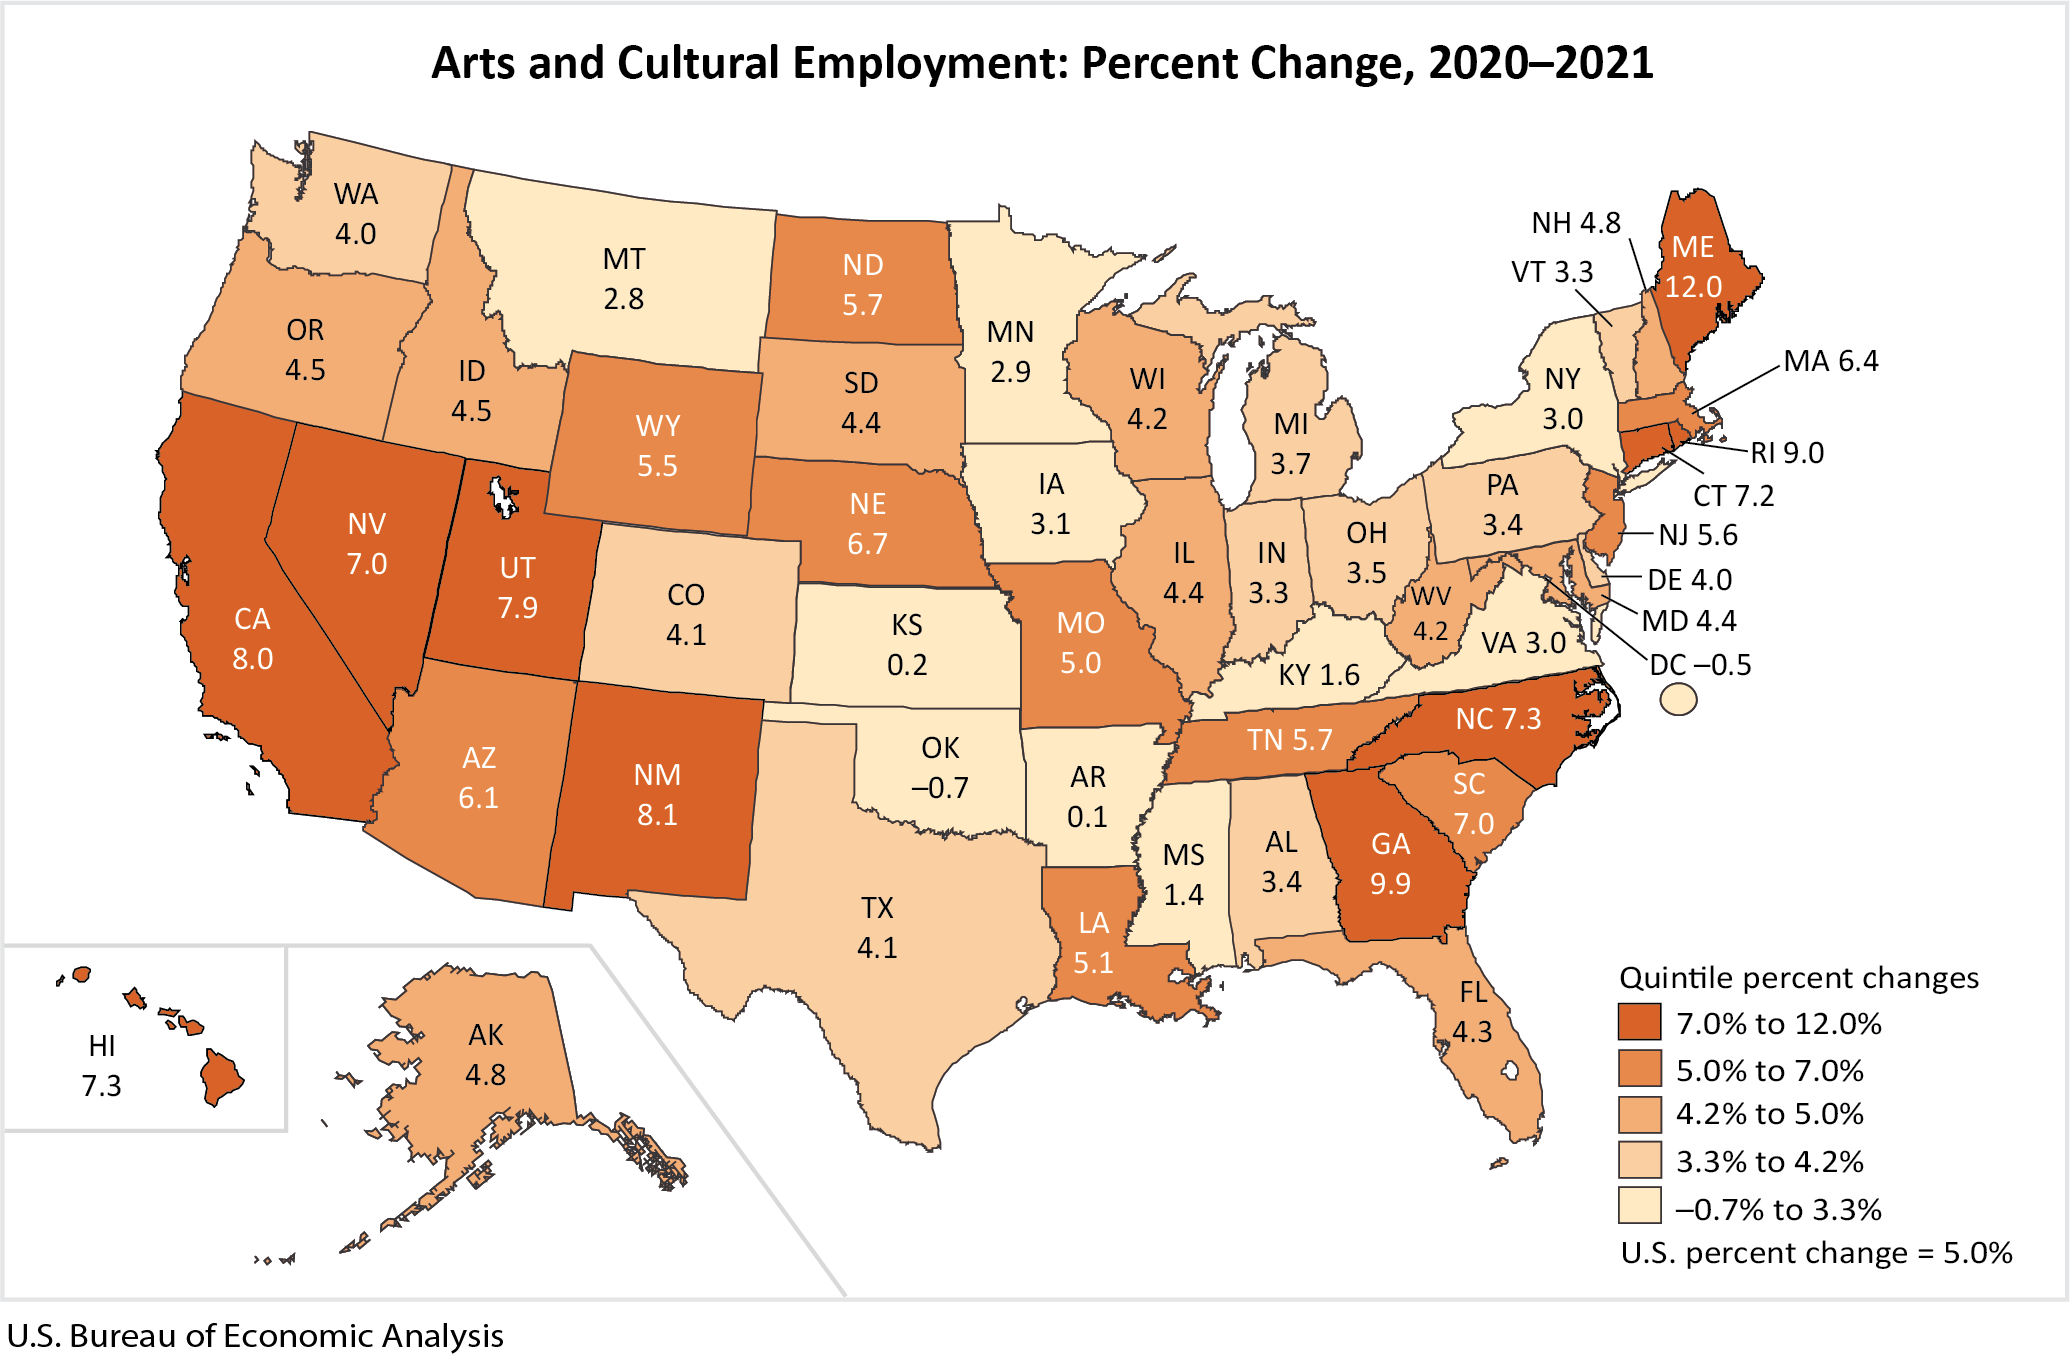 Arts and Cultural Employment: Percent Change 2020-2021